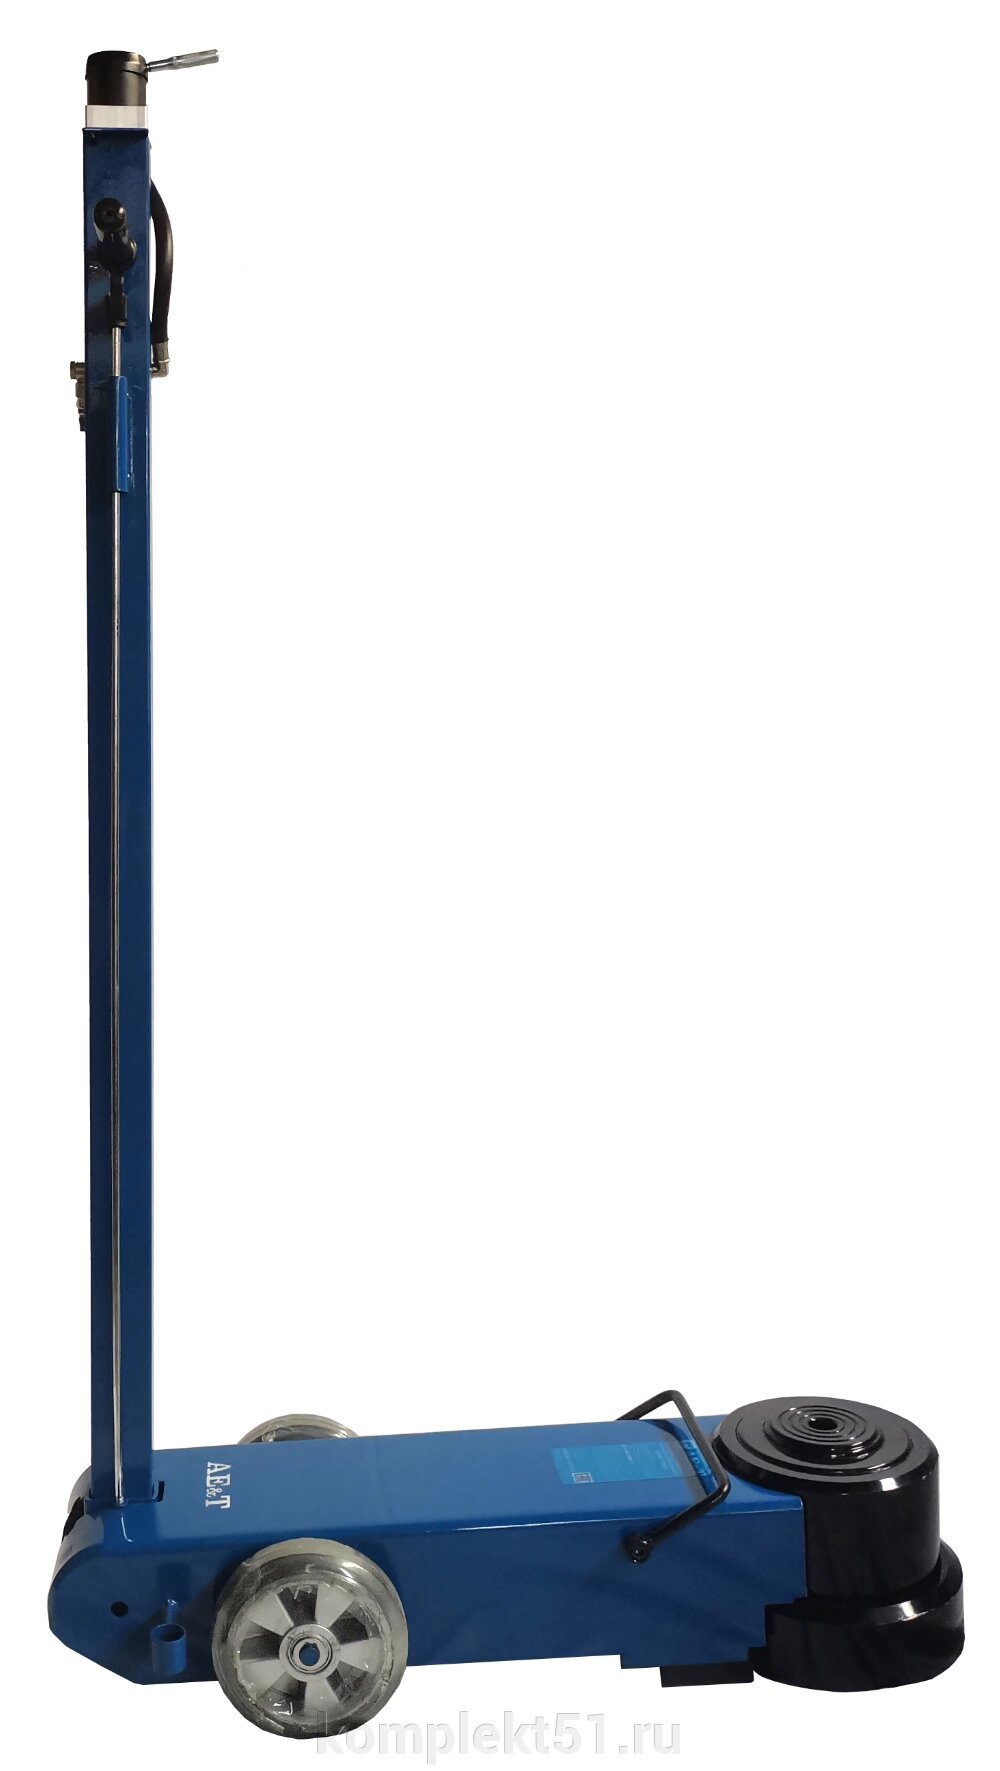 Домкрат пневмогидравлический подкатной проф 120/60т HJ-120/60 AE&T от компании Cпецкомплект - оборудование для автосервиса и шиномонтажа в Мурманске - фото 1